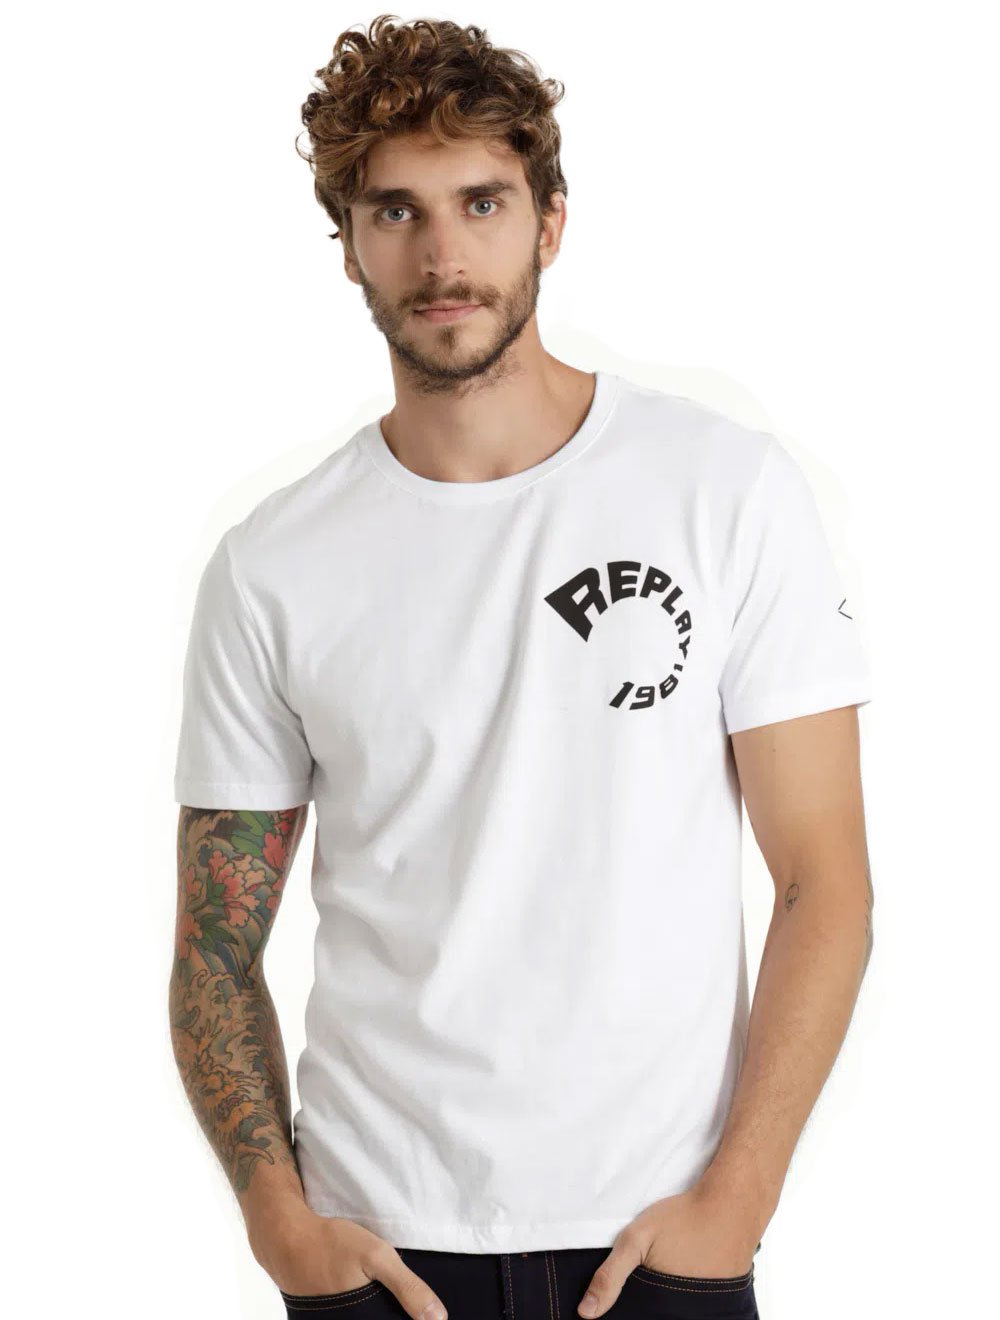 Camiseta Replay Masculina C-Neck Fantastic Branca